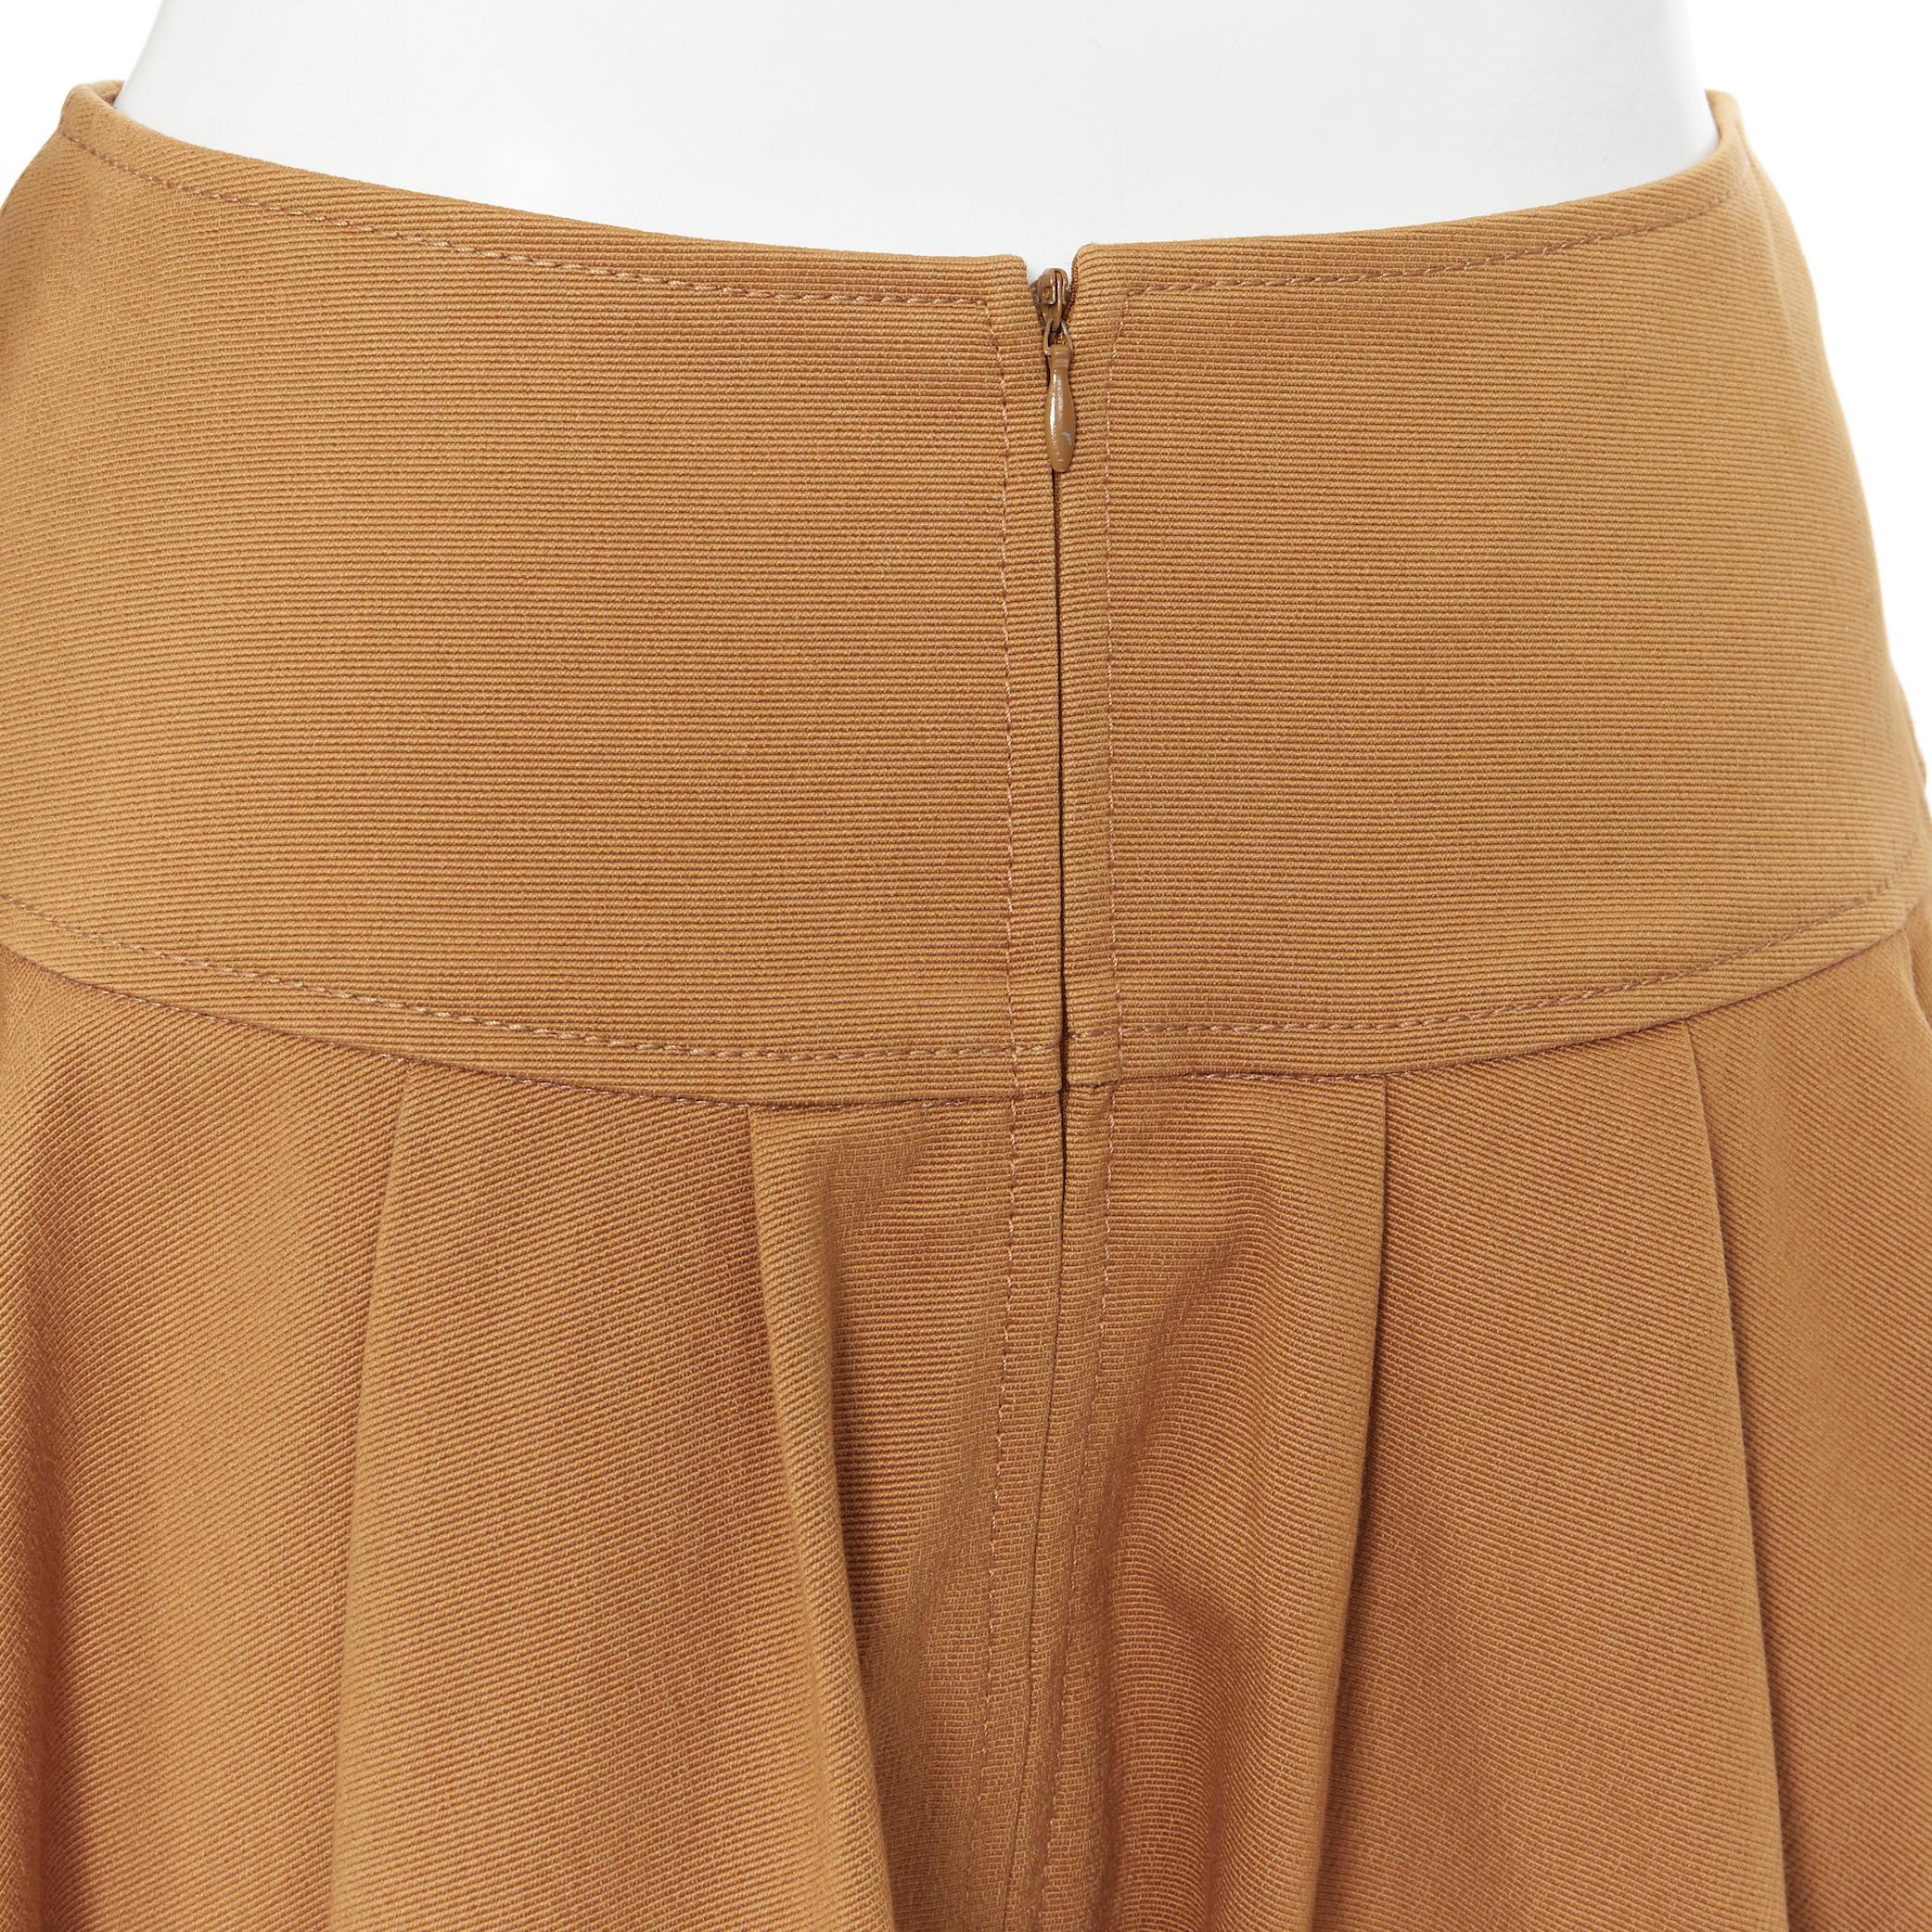 OSCAR DE LA RENTA tan brown nylon cotton flared knee length skirt US0 25